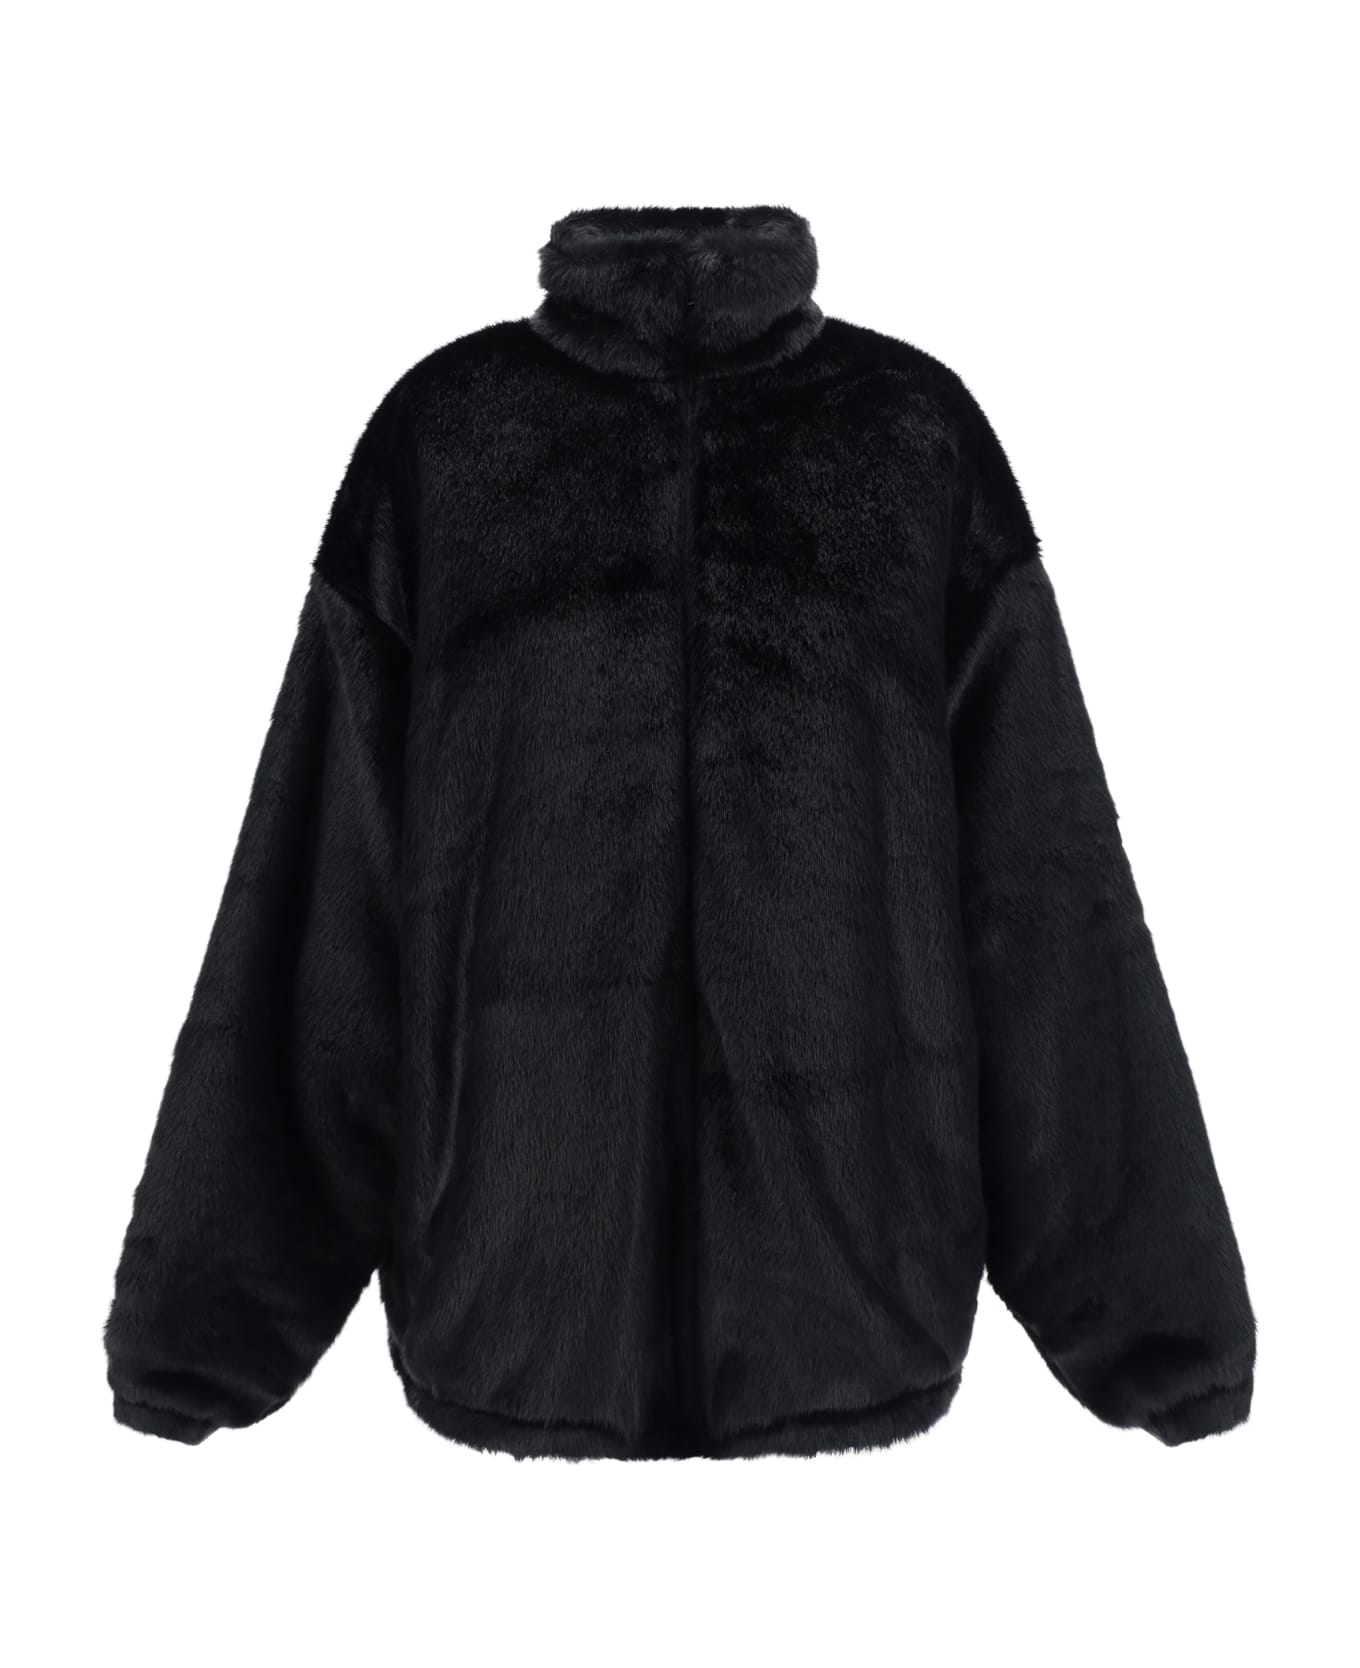 Balenciaga Jacket - Black ジャケット